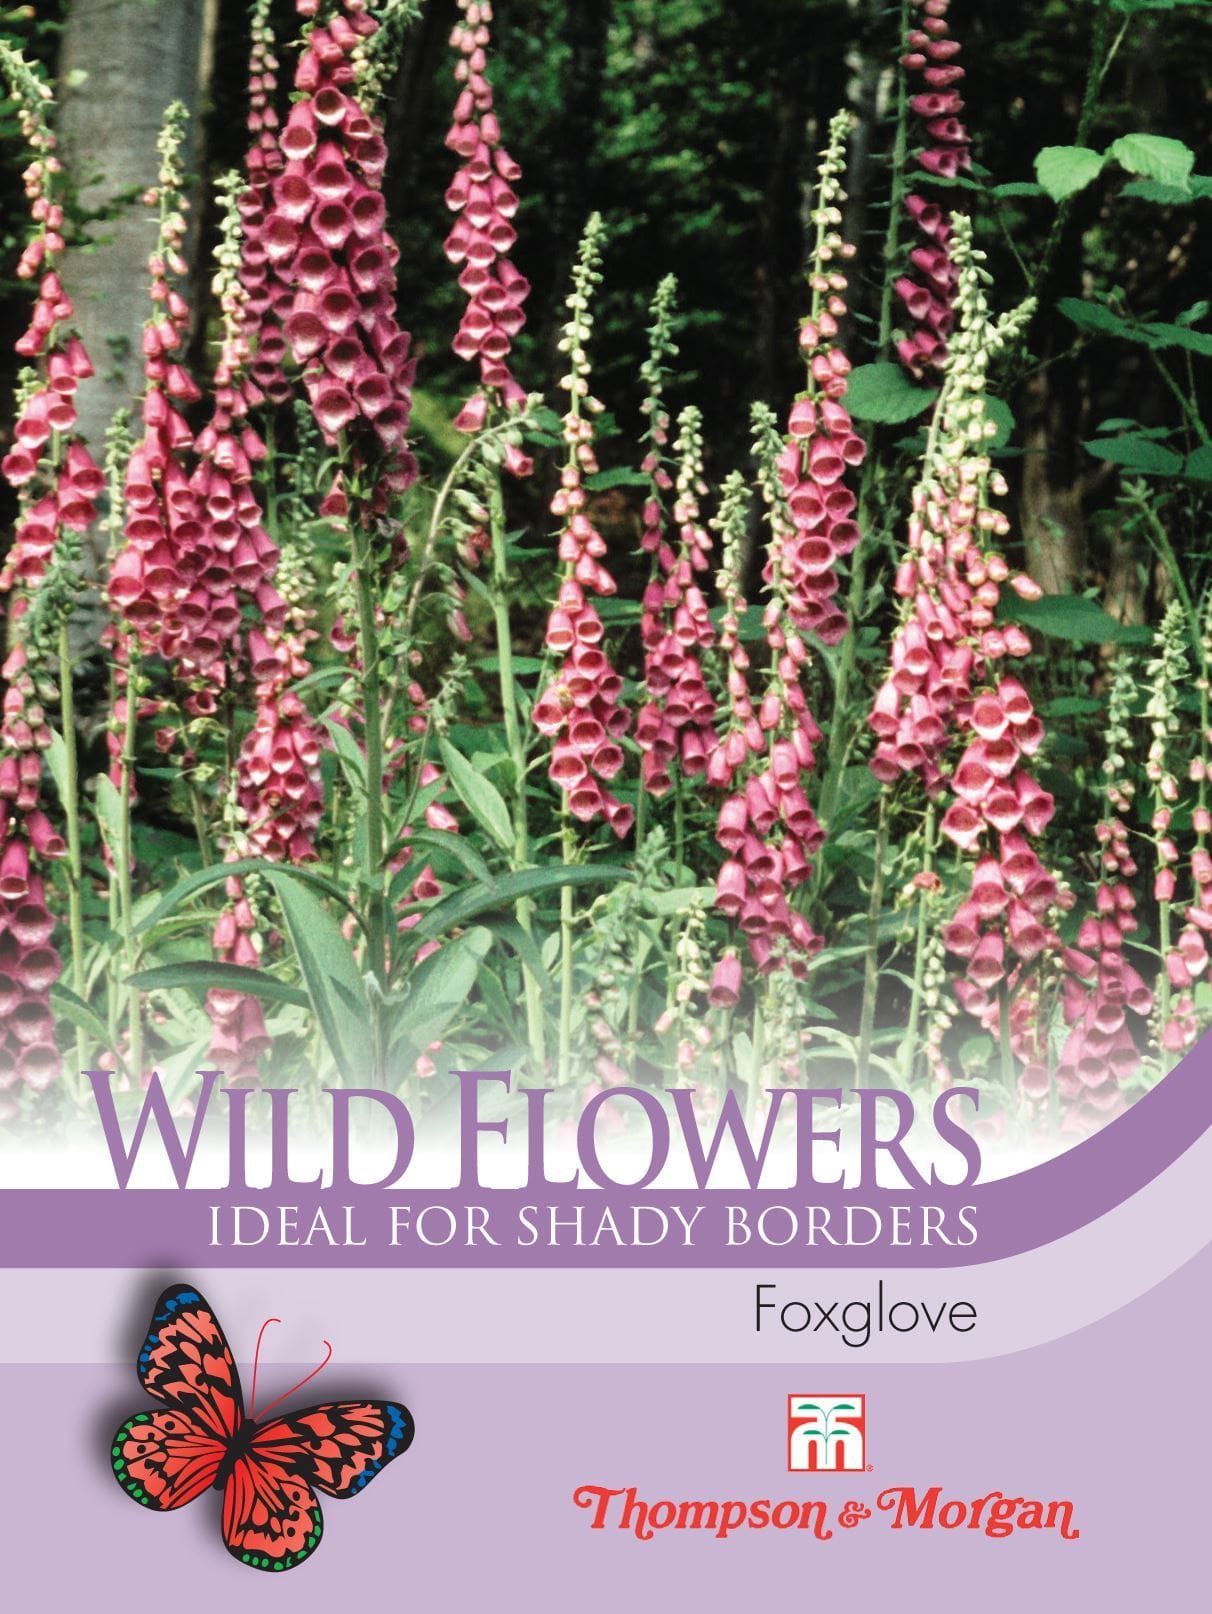 Thompson & Morgan Wild Flower Foxglove 2900 Seed